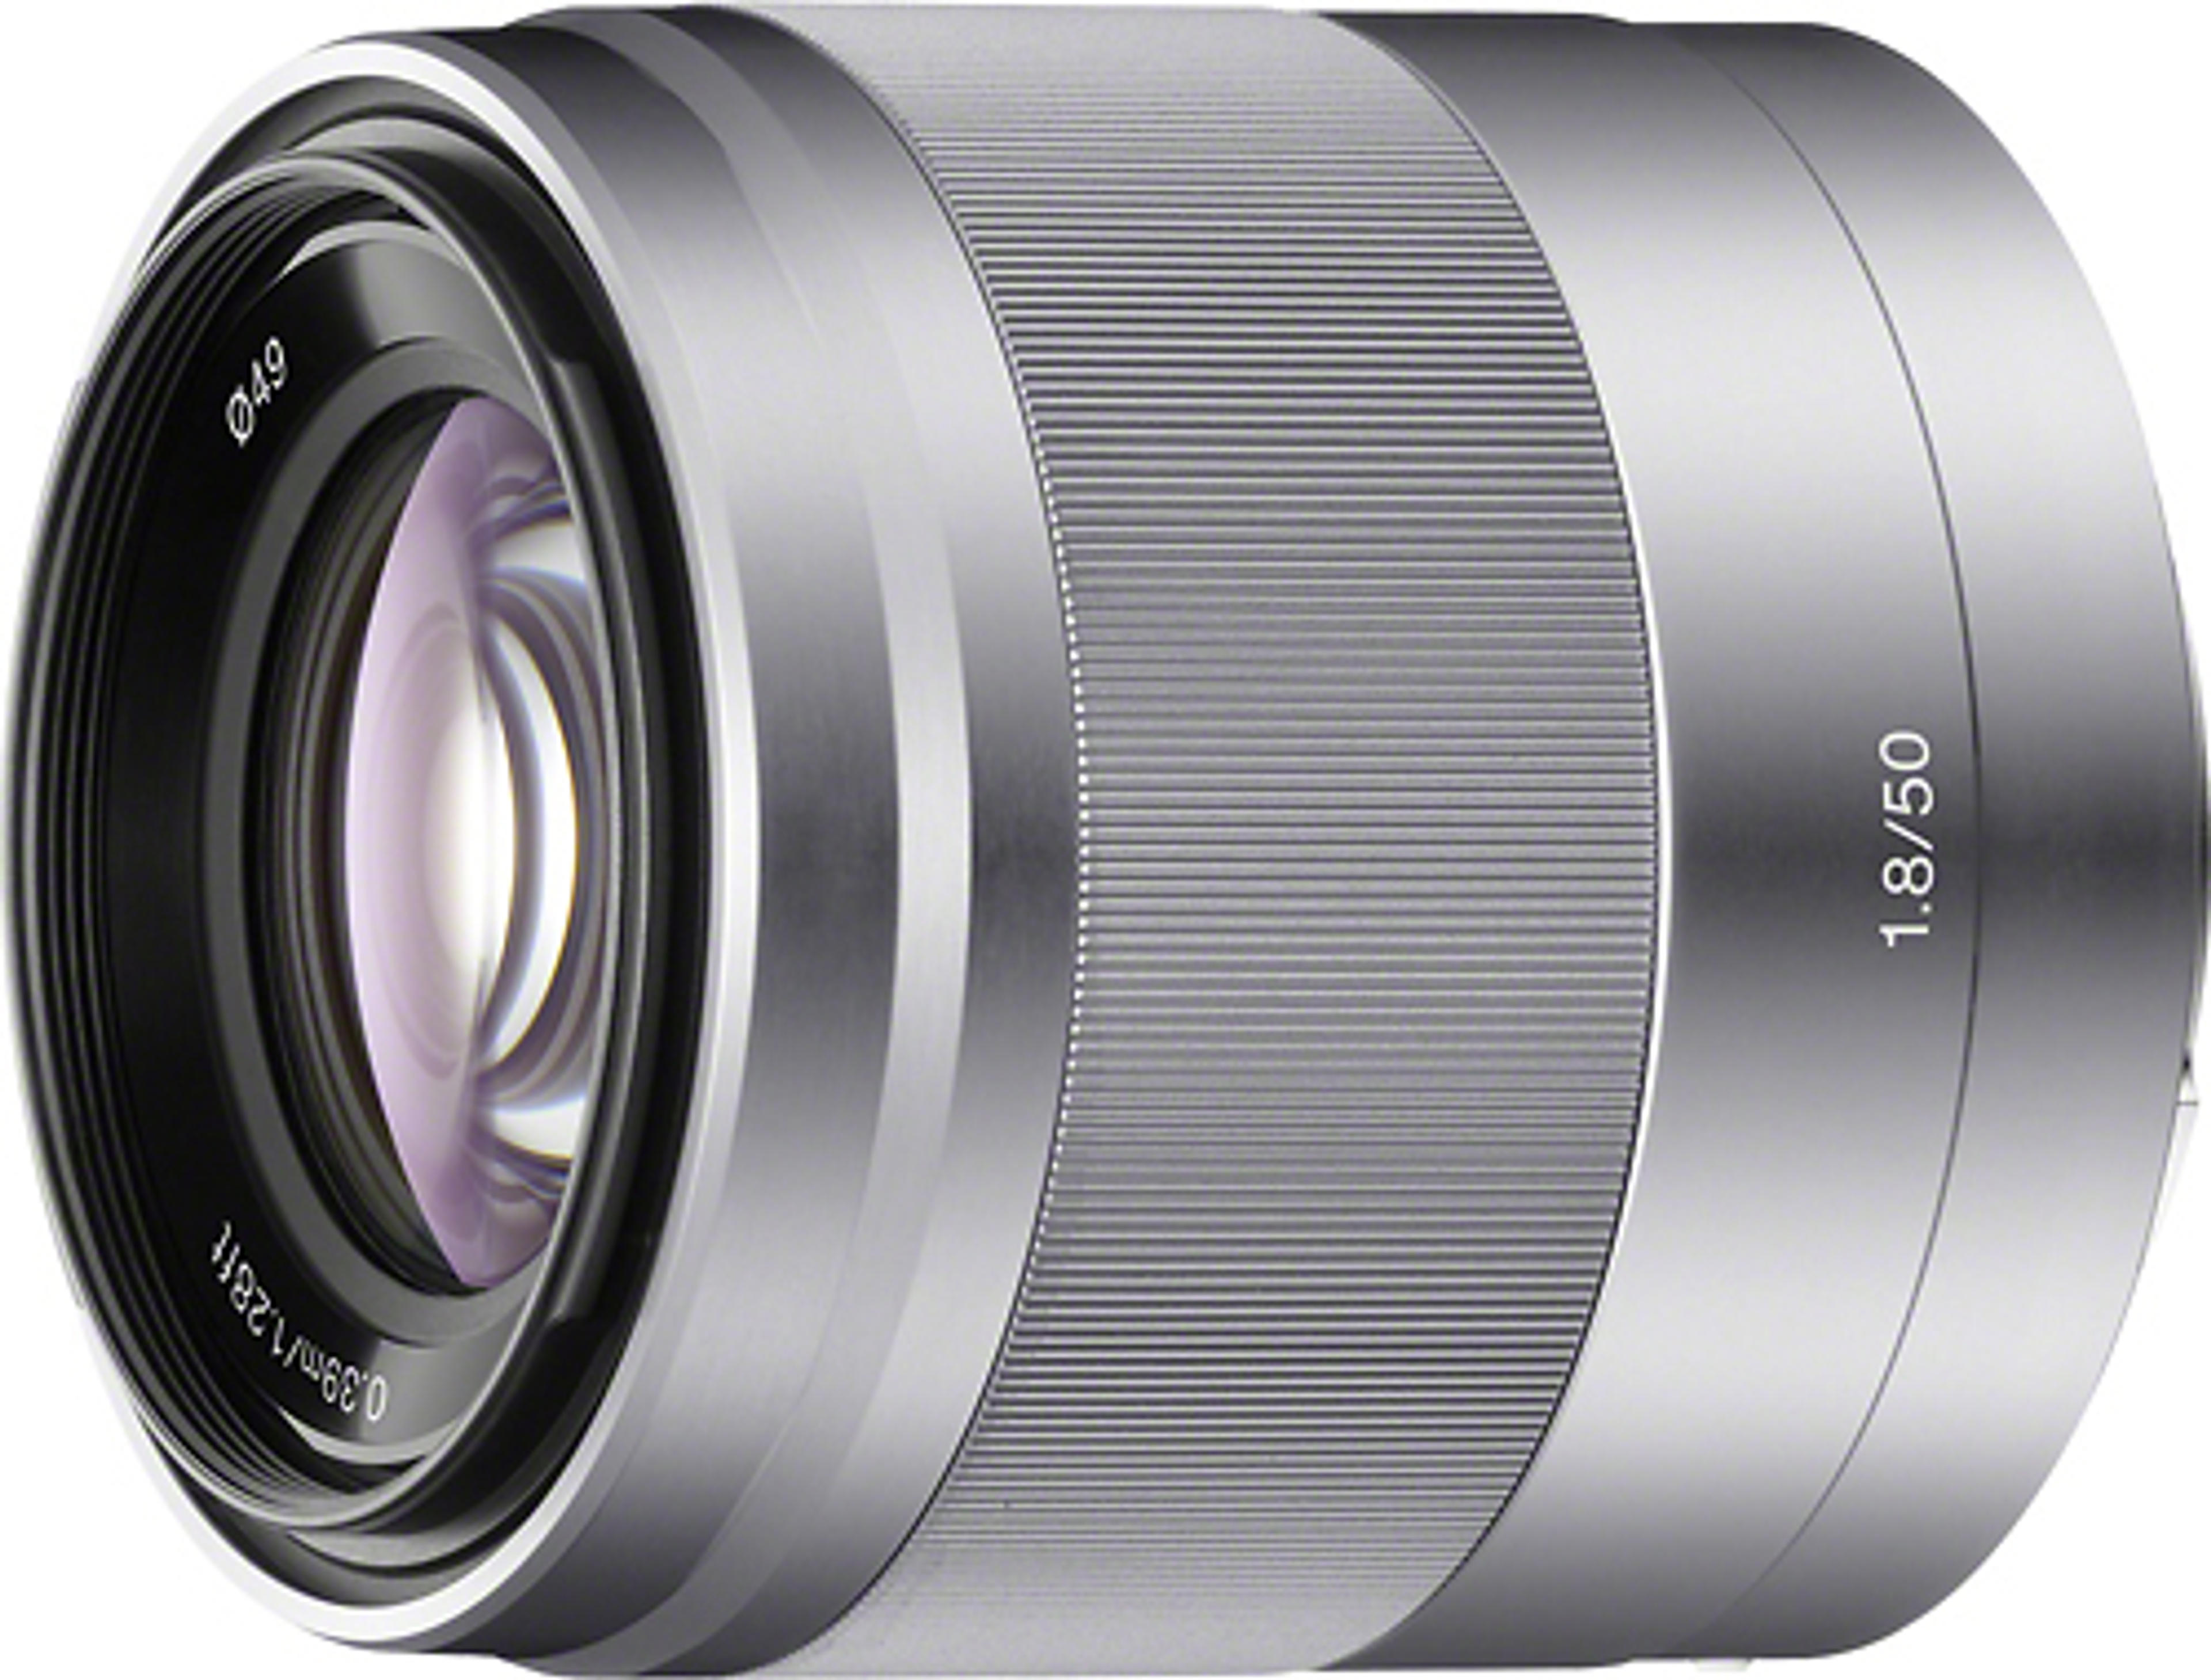 Sony - 50mm f/1.8 OSS Prime Lens for Select Alpha E-mount Cameras - Silver